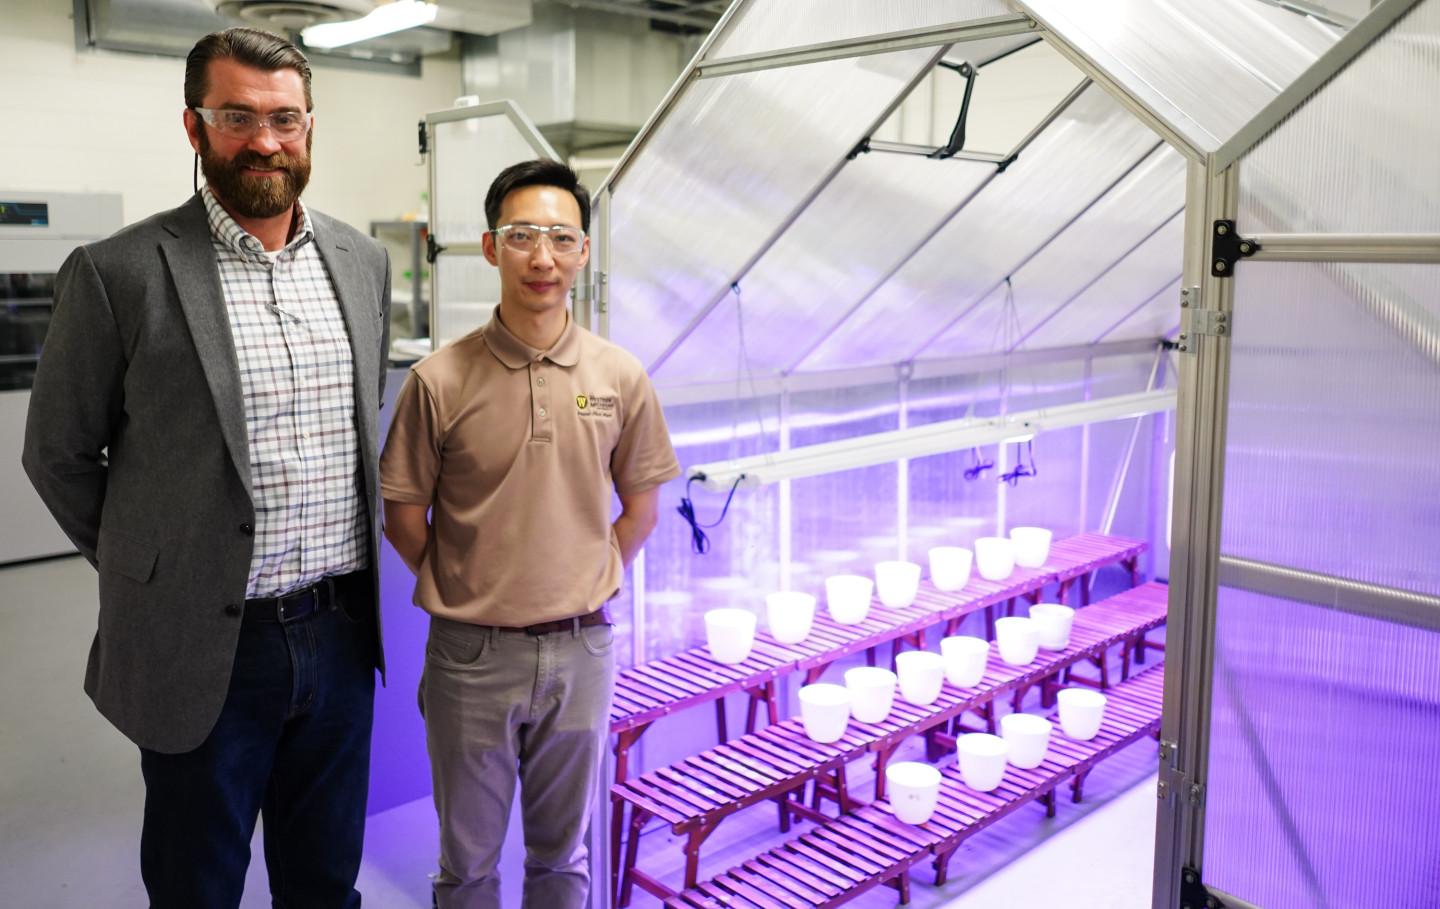 Lon Pschigoda and Jason Wang pose for a photo next to the lab's greenhouse.